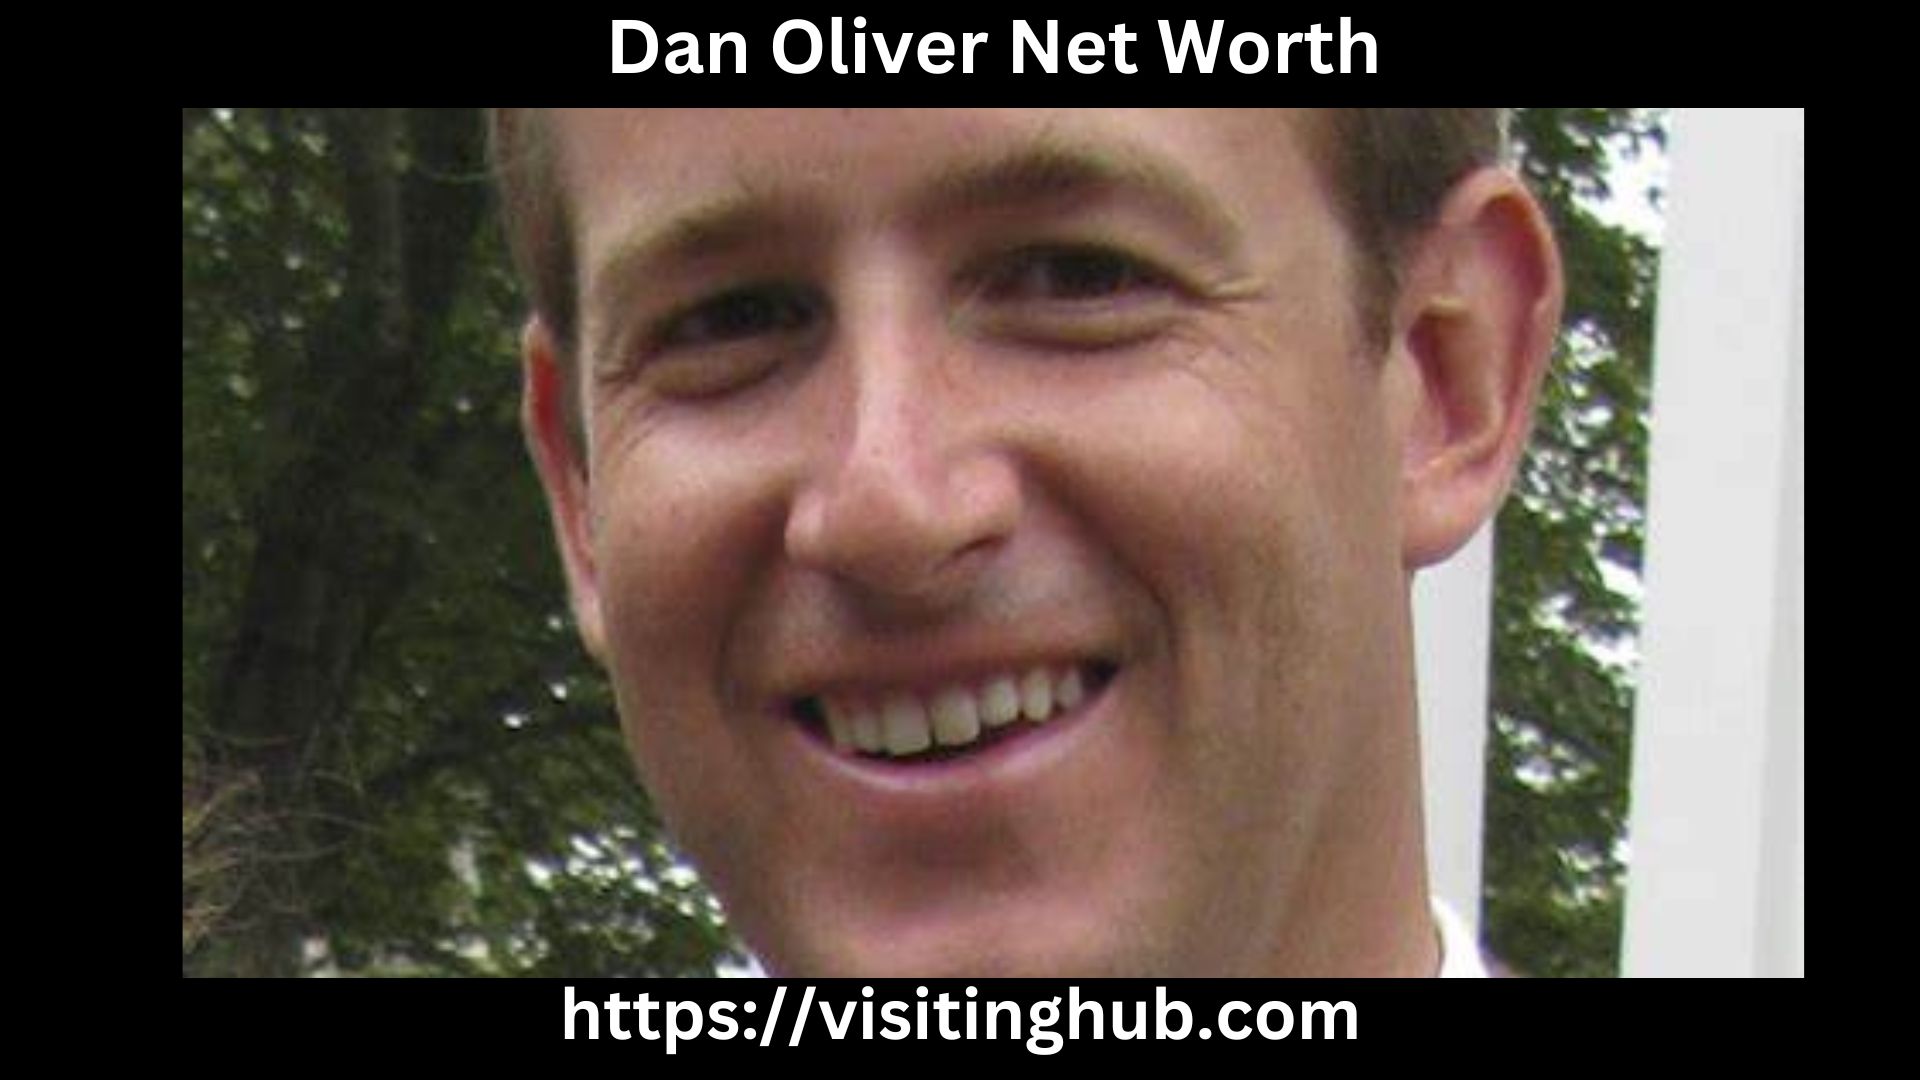 Dan Oliver Net Worth